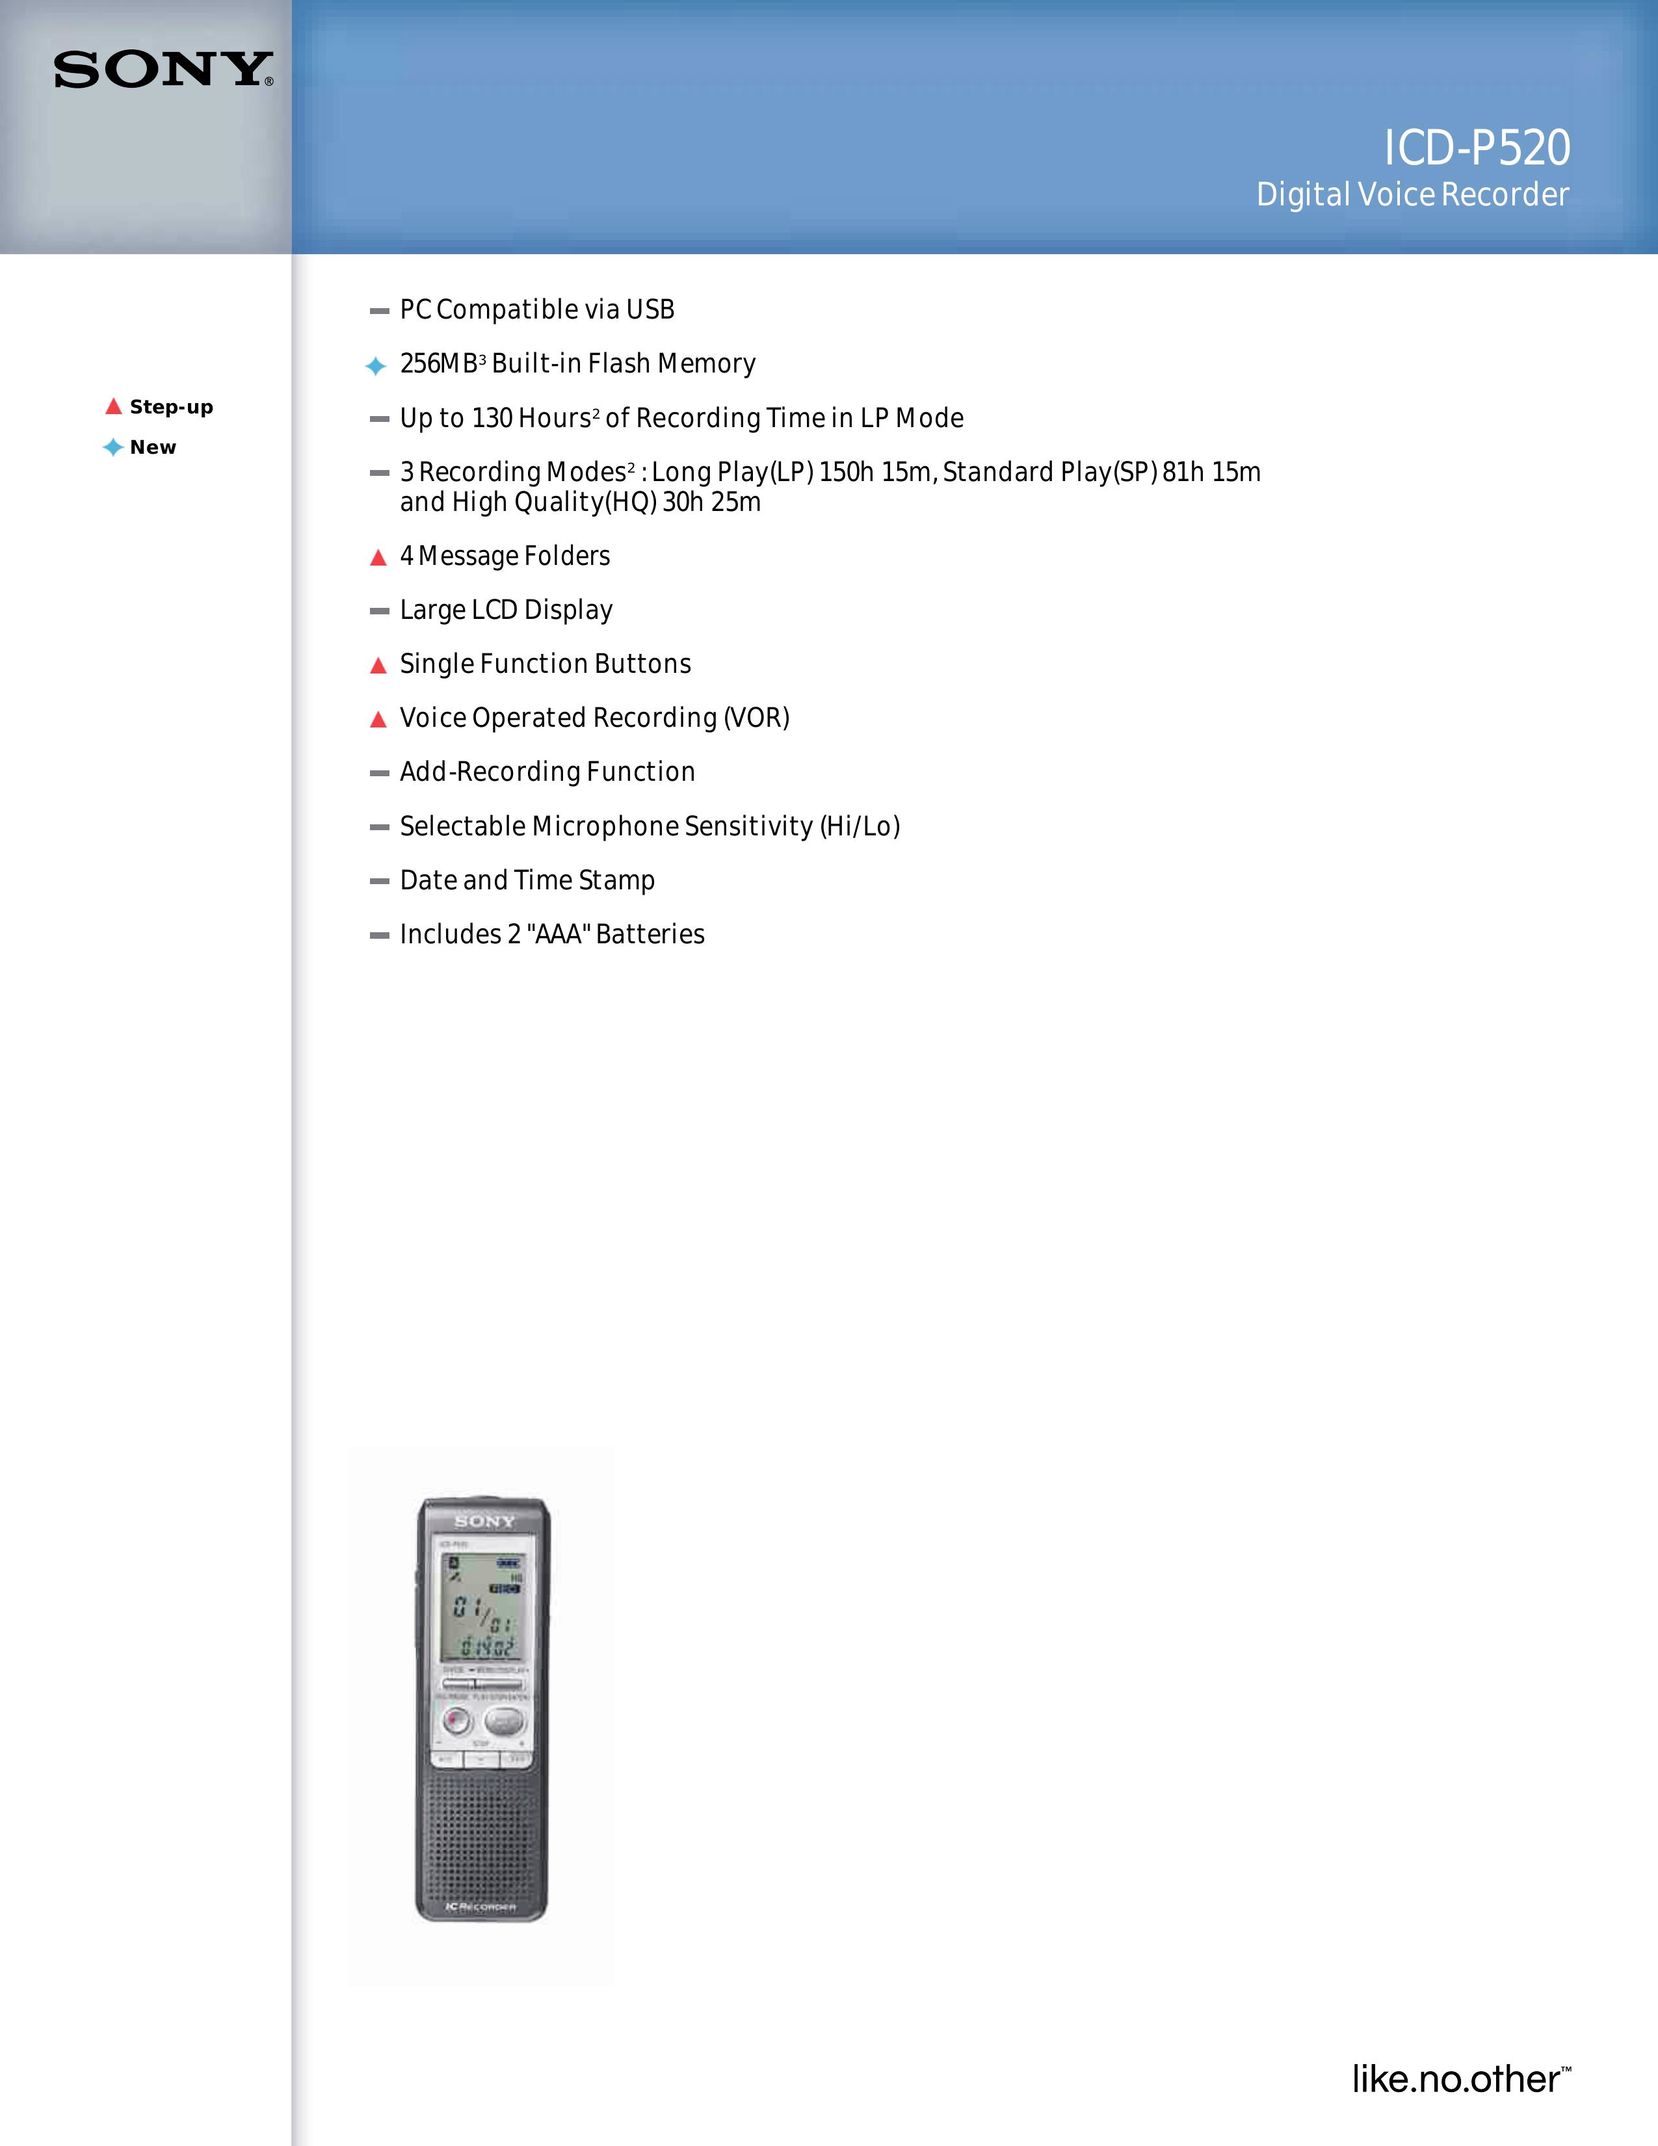 Sony ICD-P520 DVR User Manual